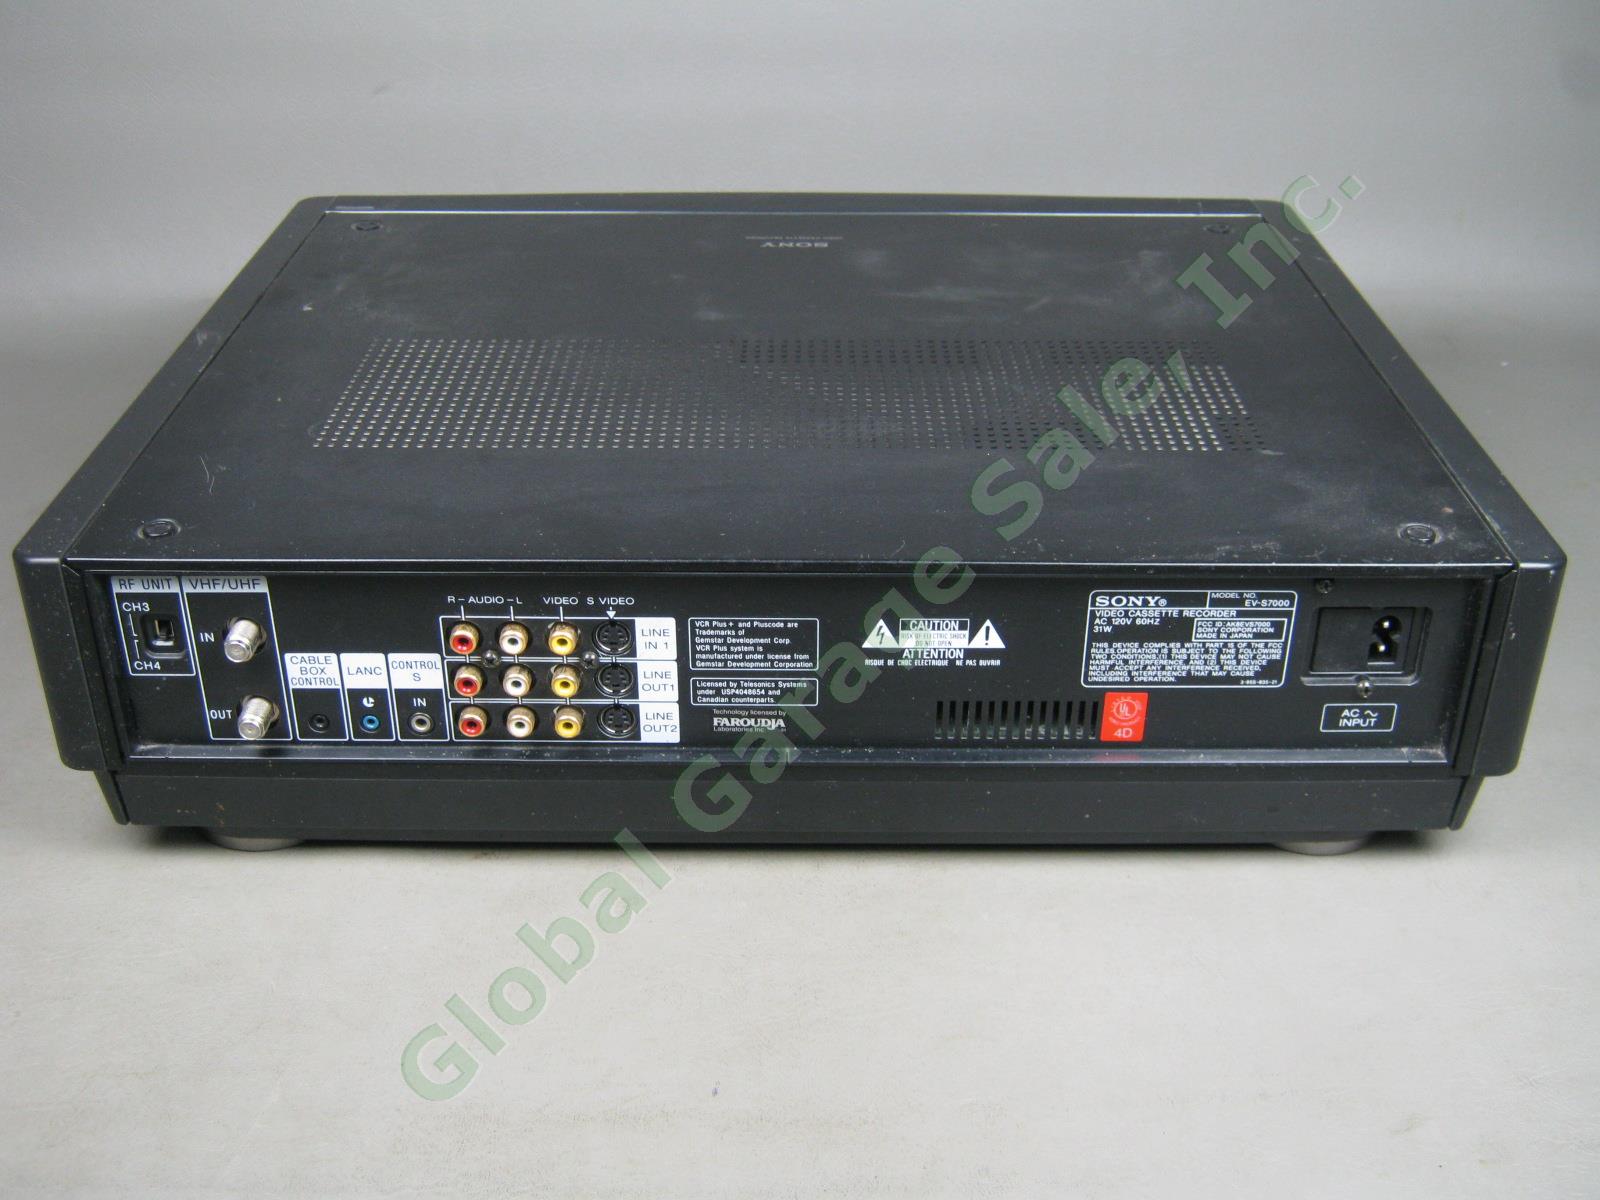 Sony EV-S7000 Hi8 8mm Digital HiFi Editing VCR Player Recorder +Remote Bundle NR 4